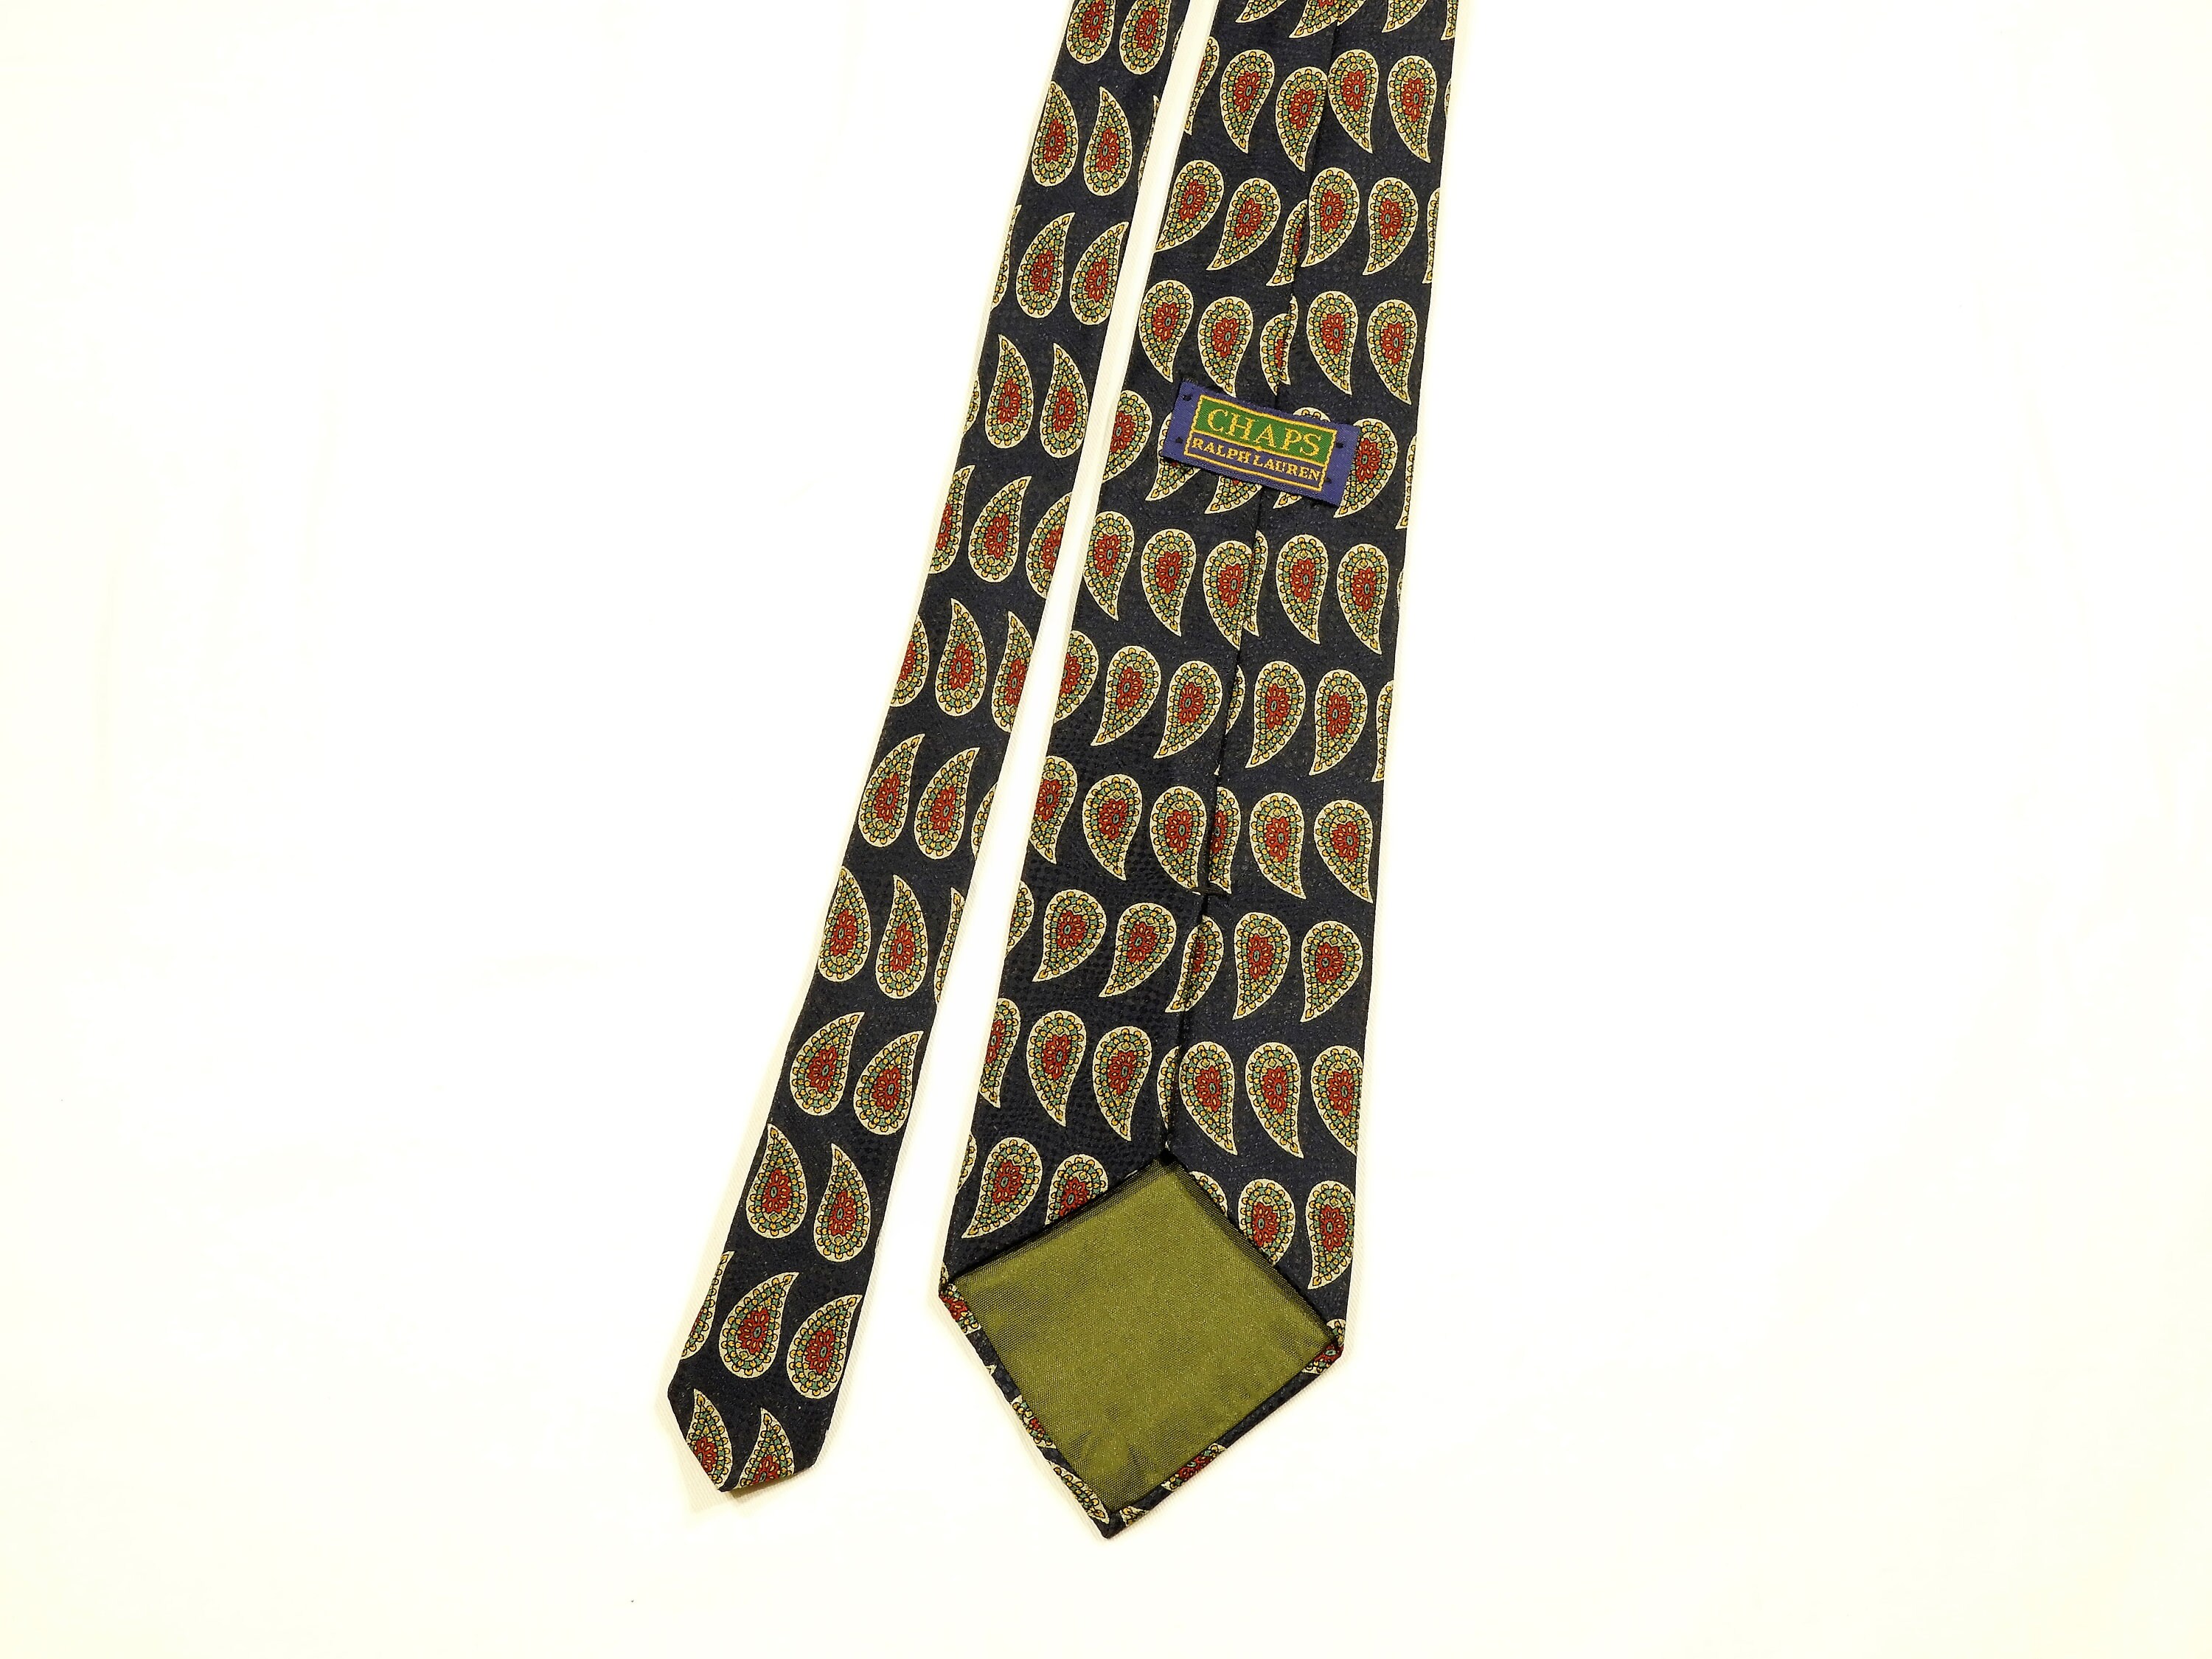 Vintage Chaps Necktie, Ralph Lauren Purple Label, Traditional Navy Blue